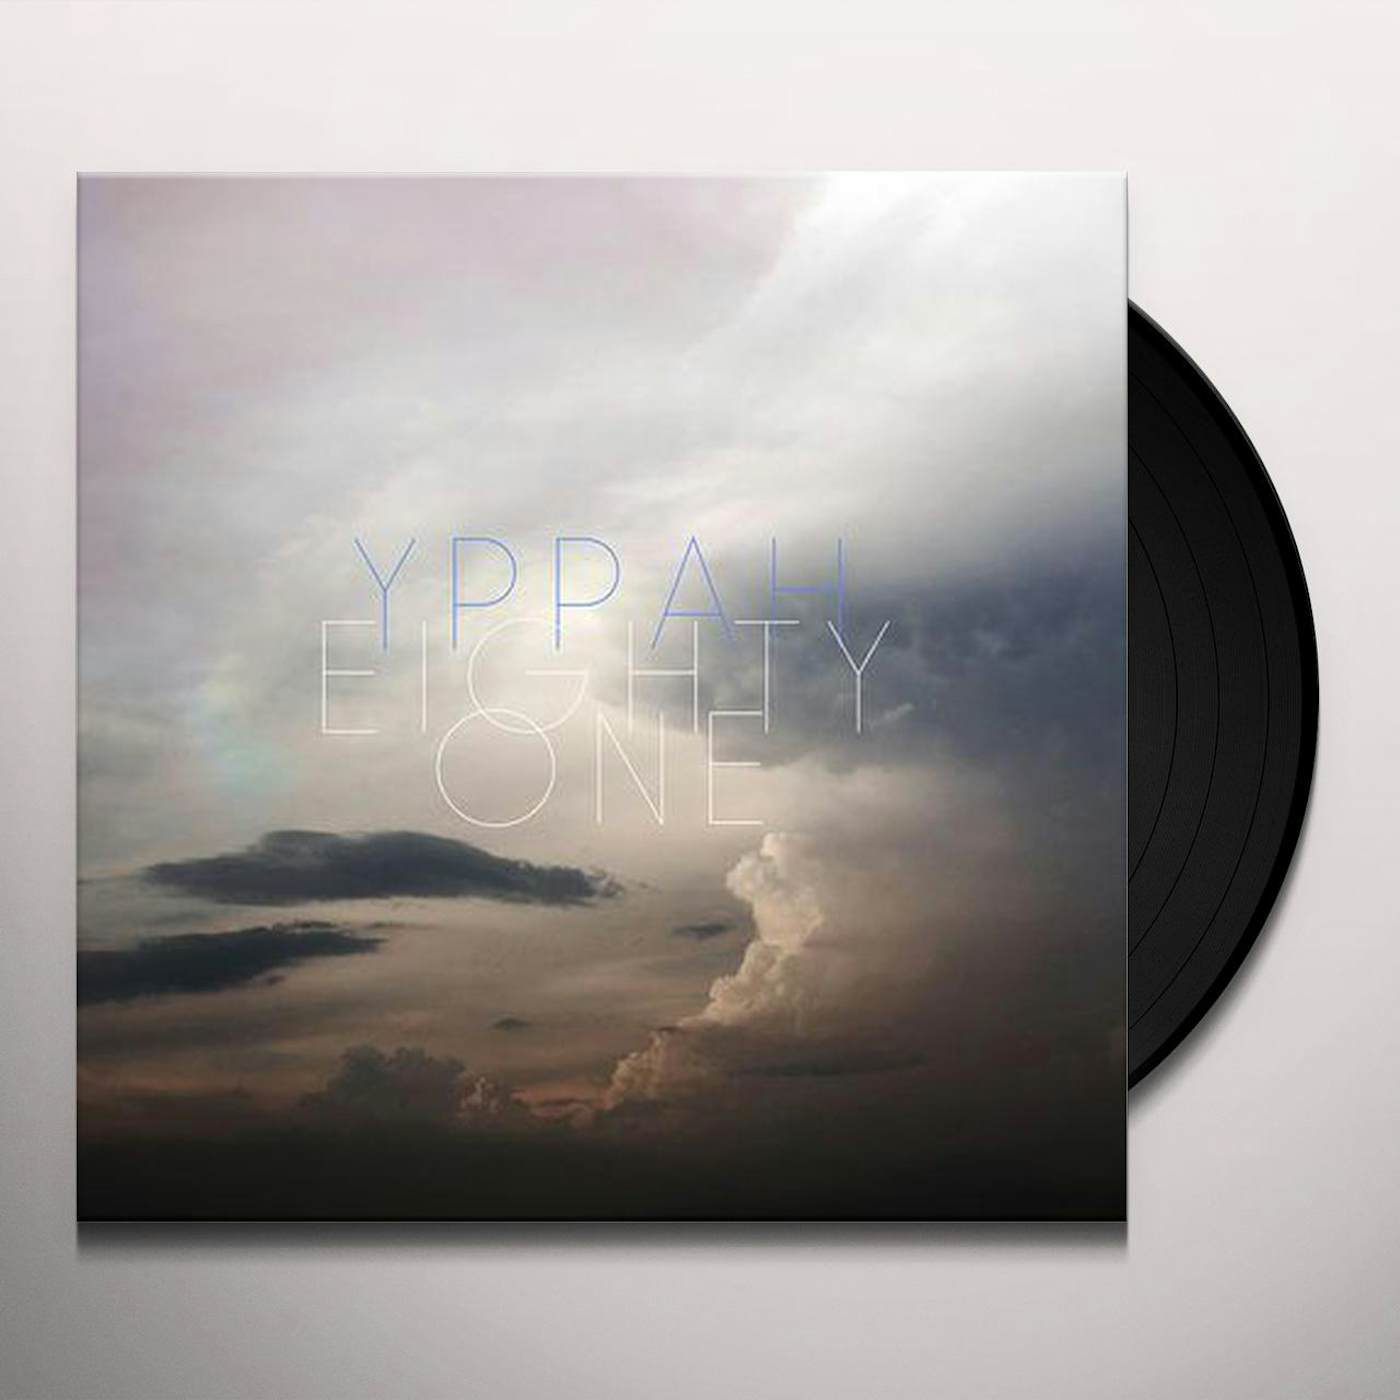 Yppah Eighty One (2 Xlp) Vinyl Record